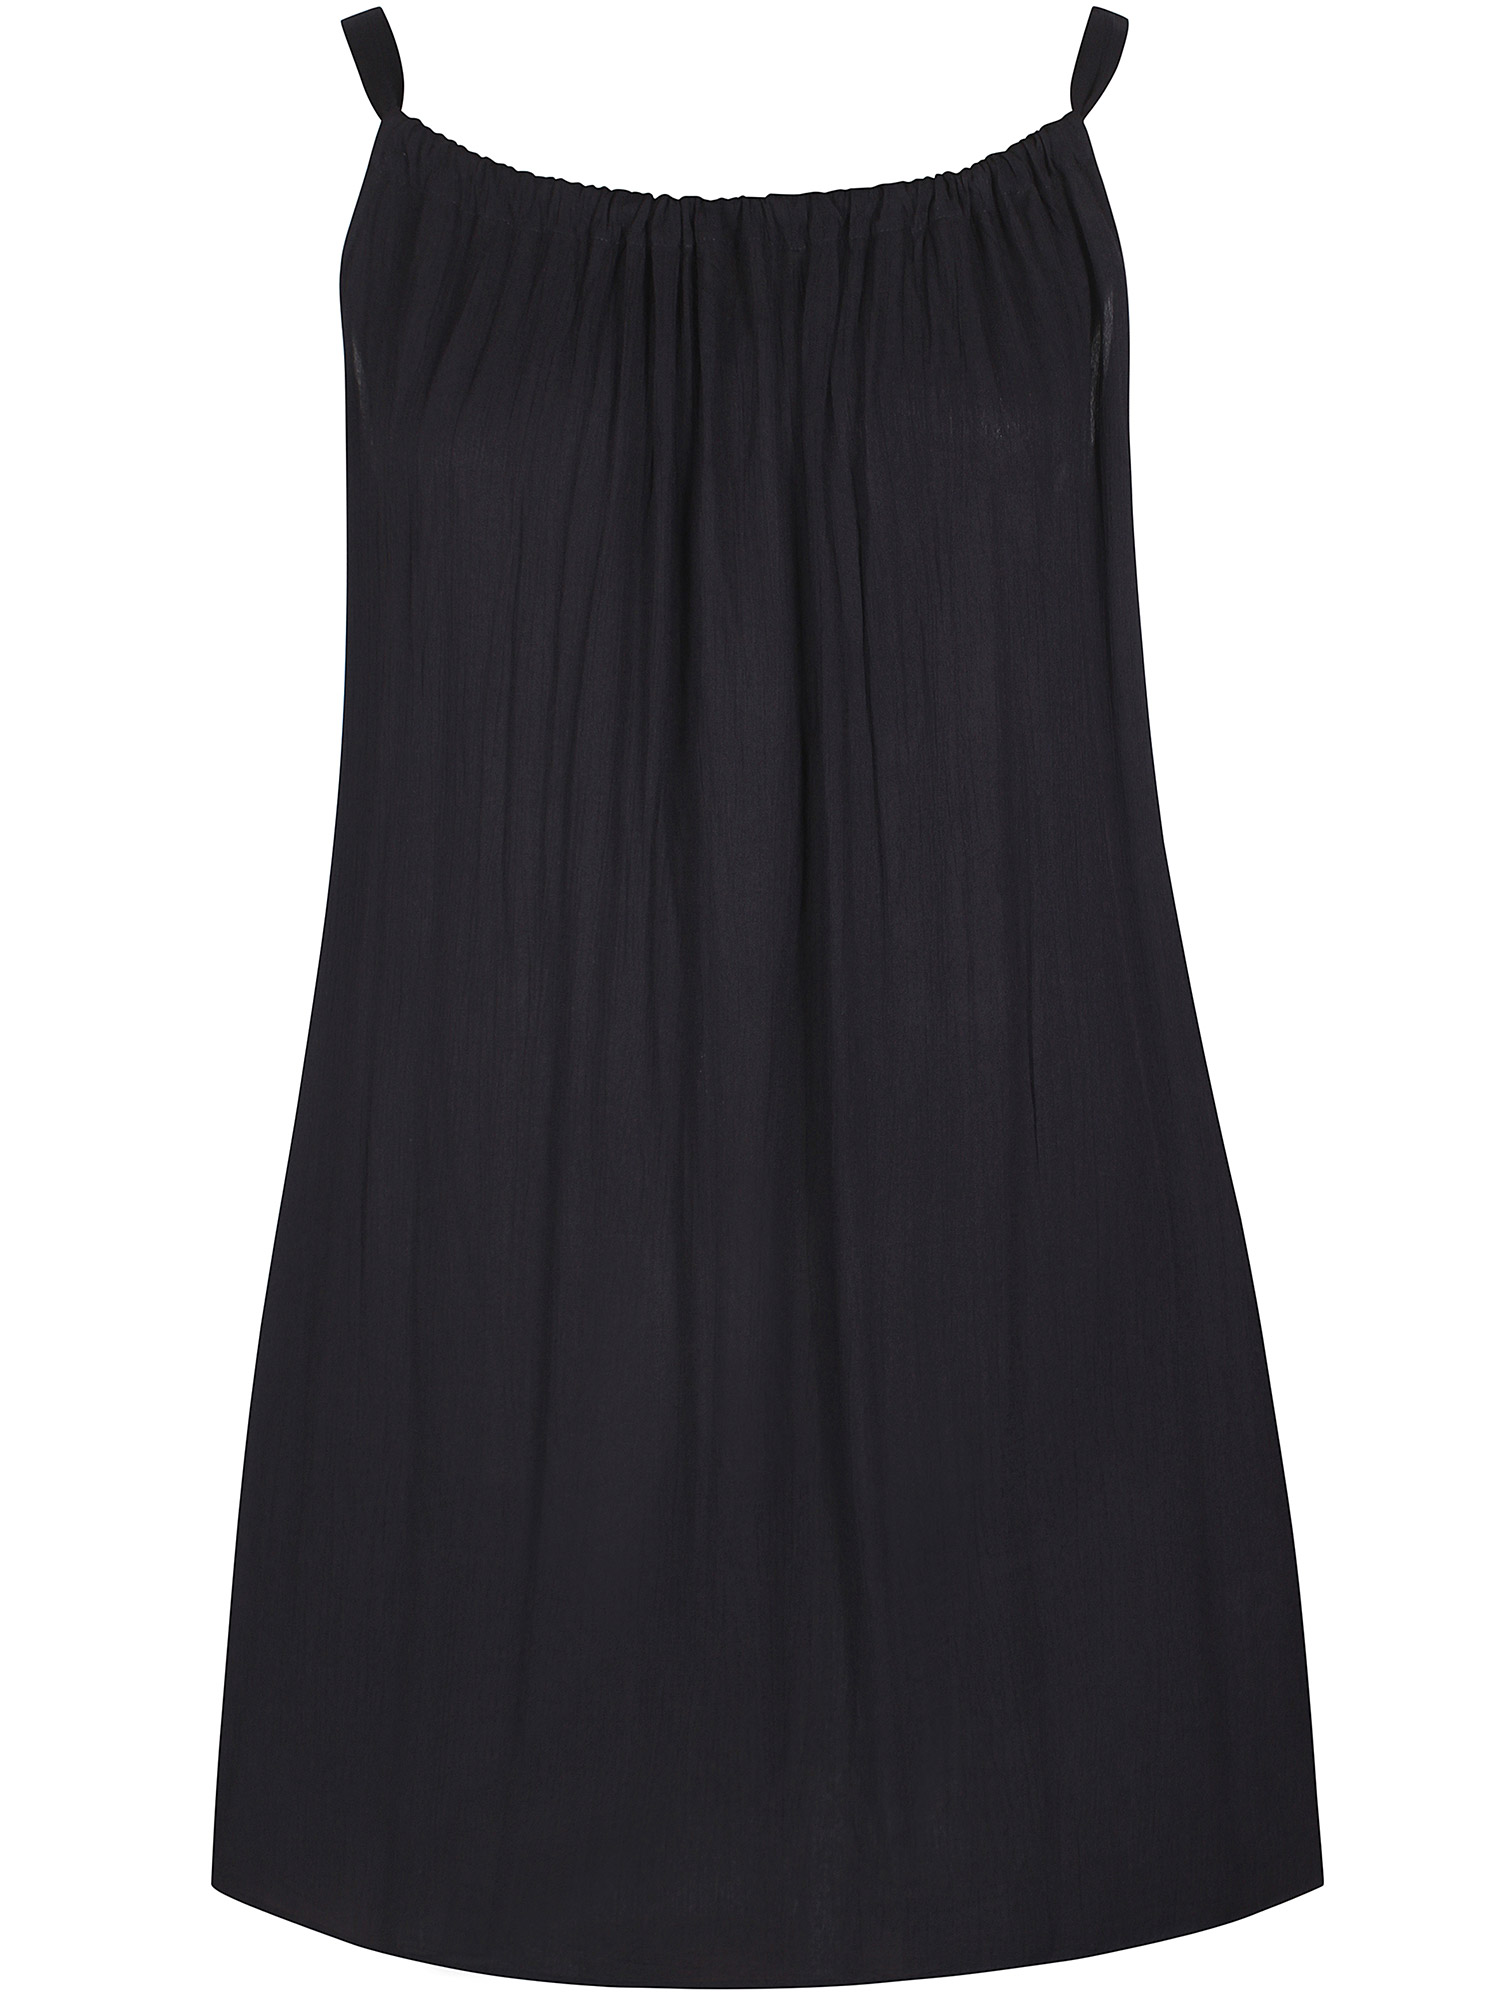 Nelia - Søt svart kjole i bærekraftig viskose fra Zhenzi